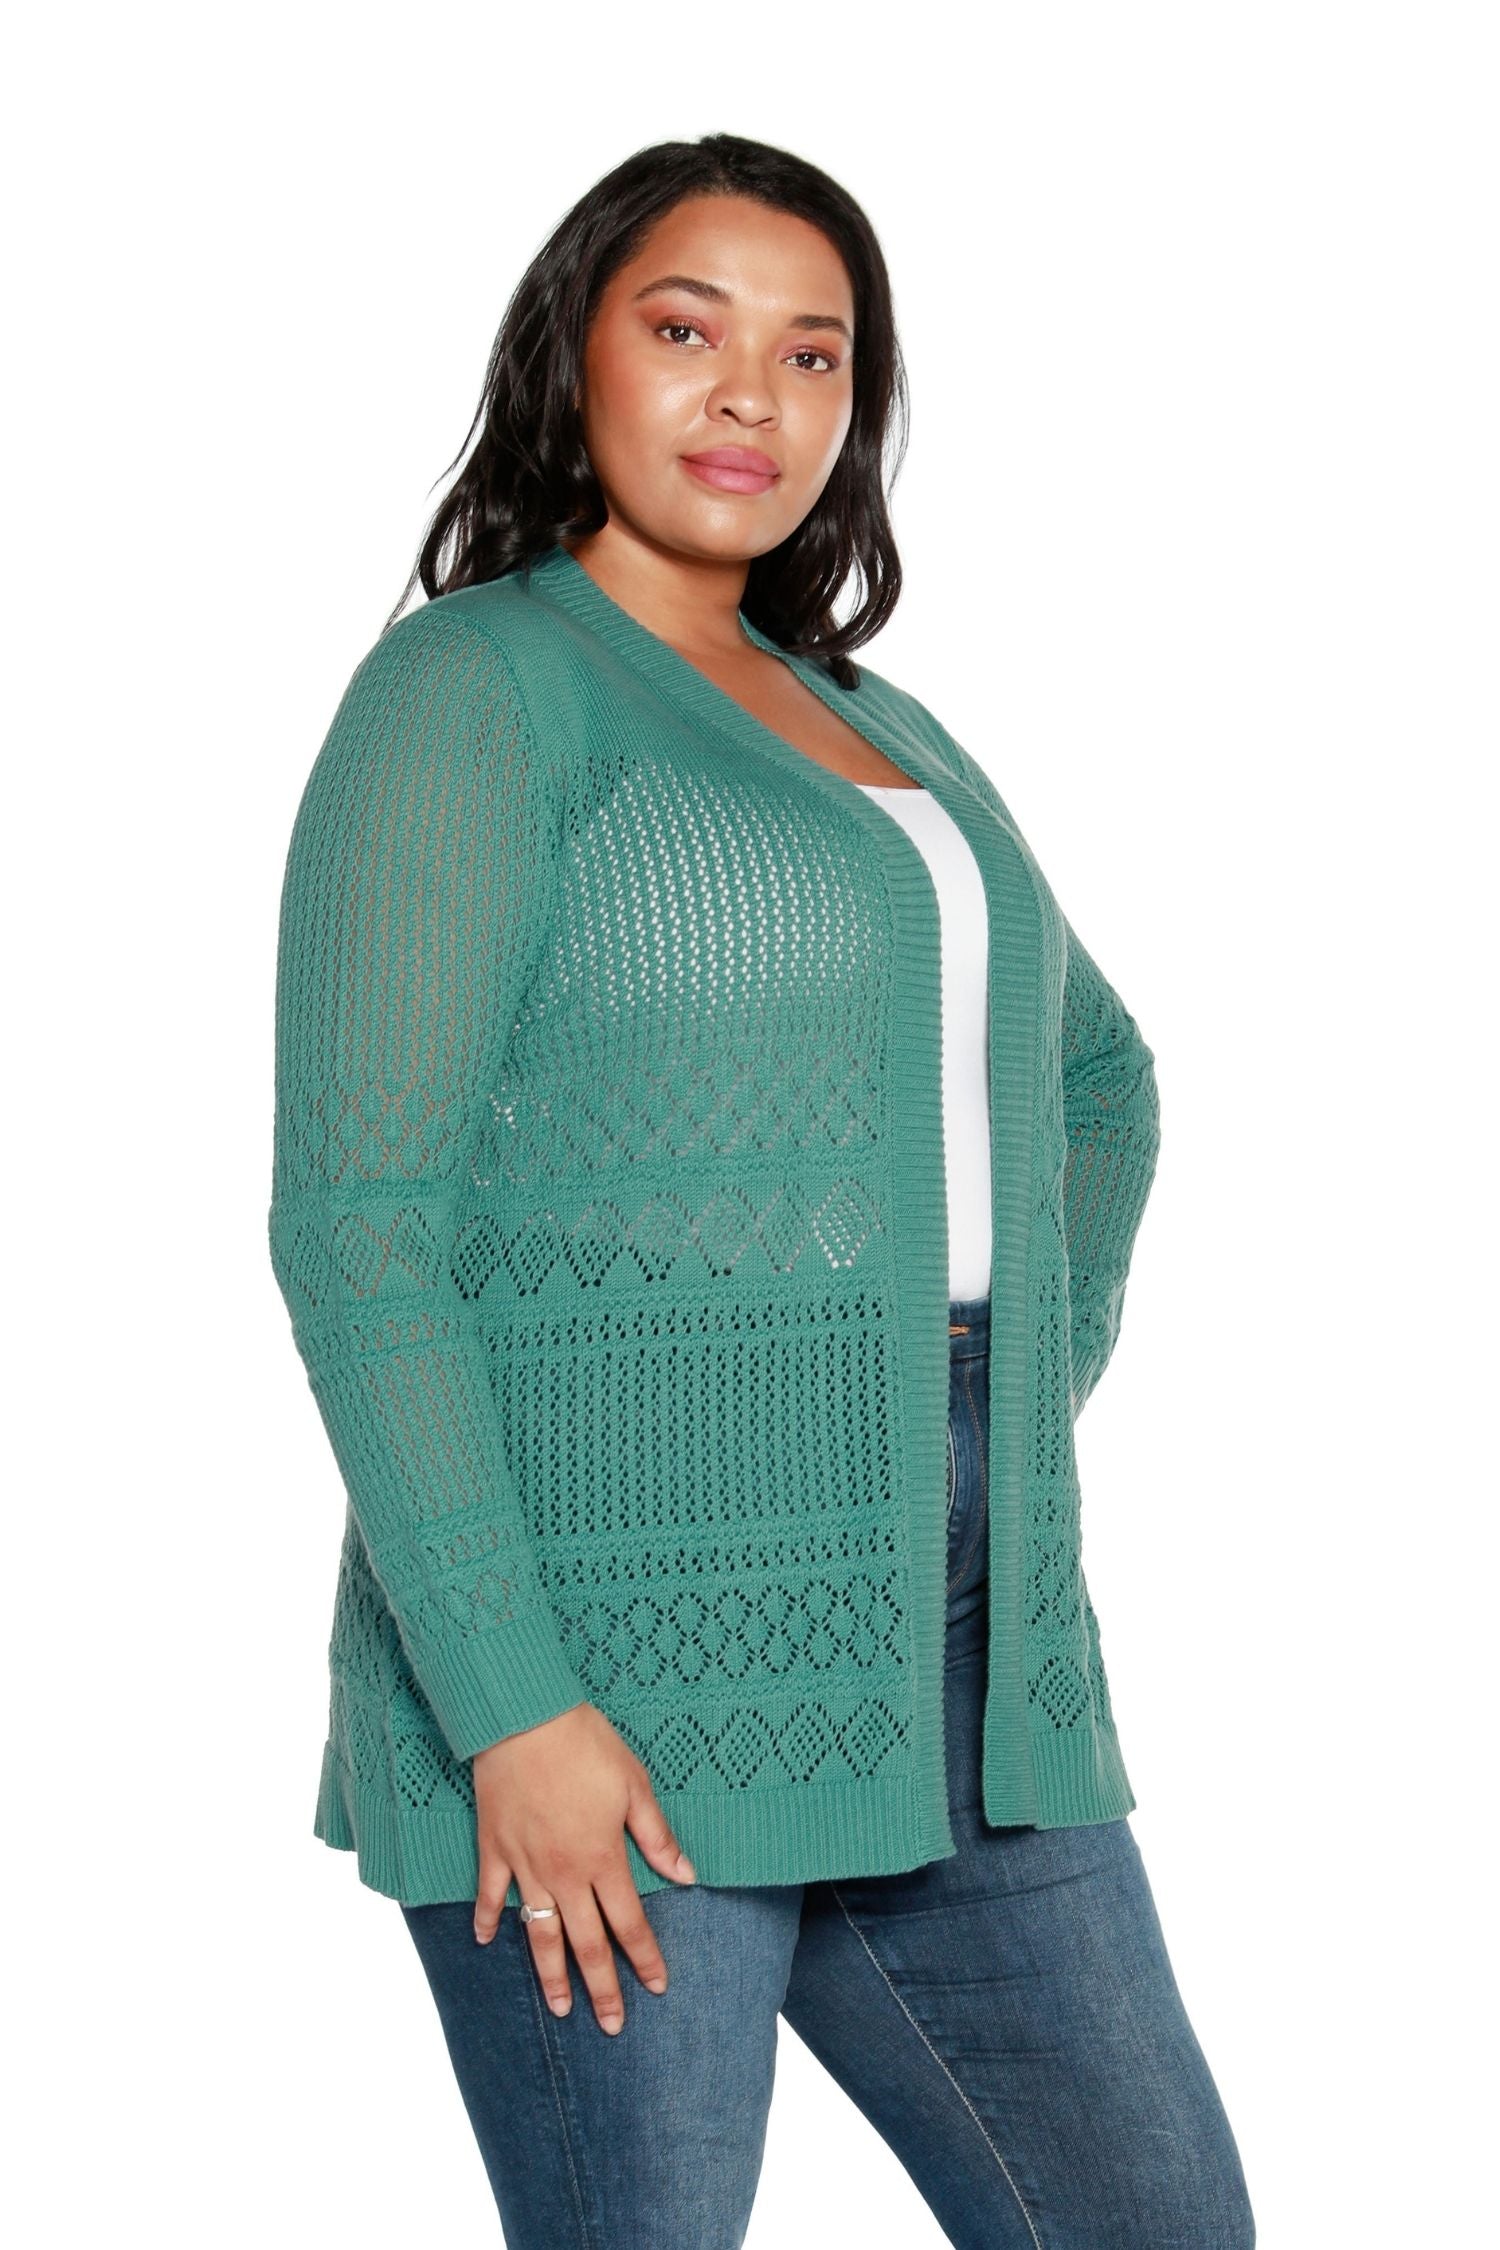 Women's Long Crochet Cardigan Mid-hip Open Sweater with Long Sleeves | Curvy